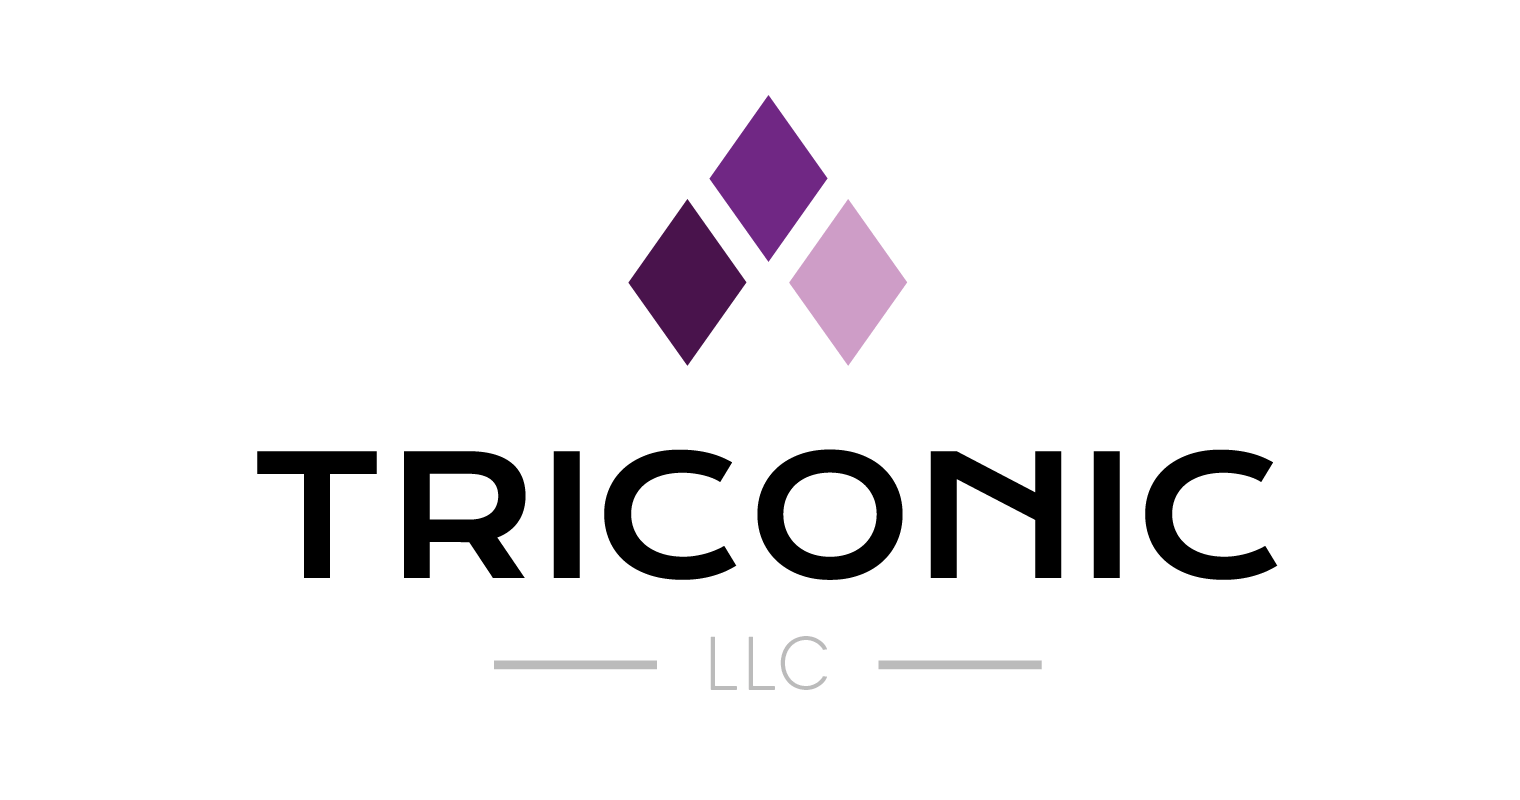 Triconic logo